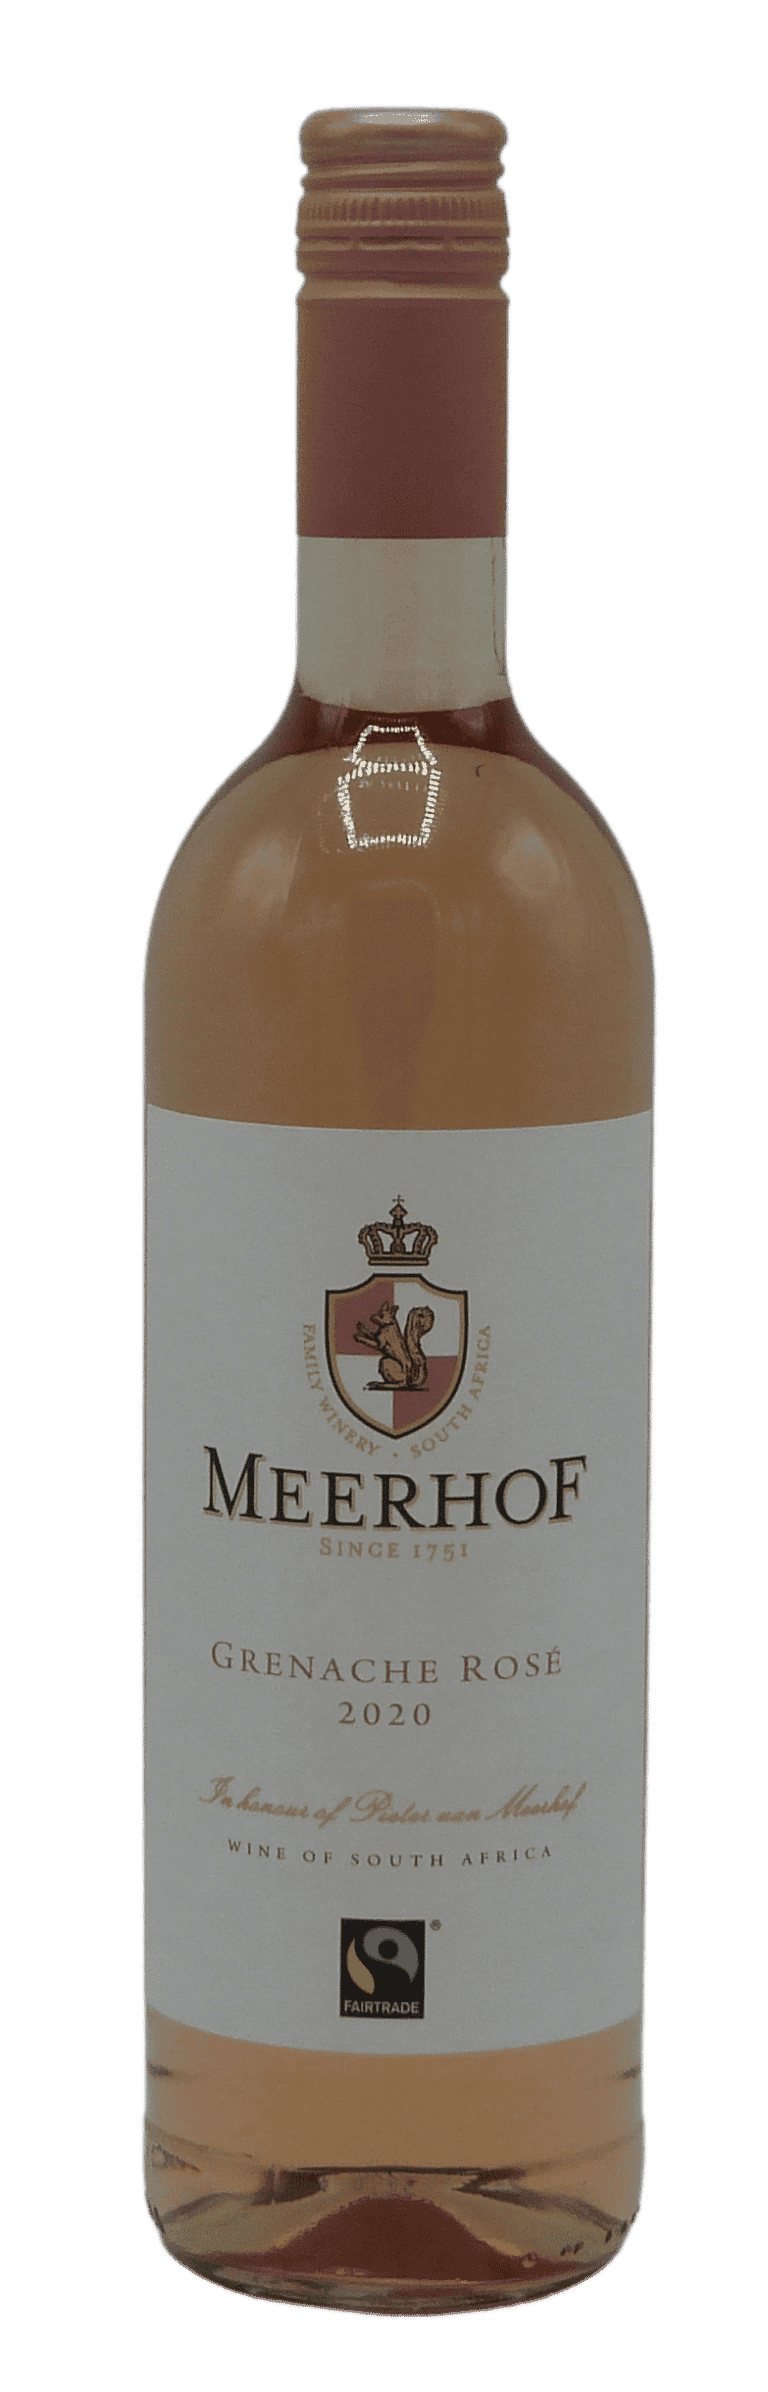 Meerhof Grenach Rosé 2020 capeandgrapes